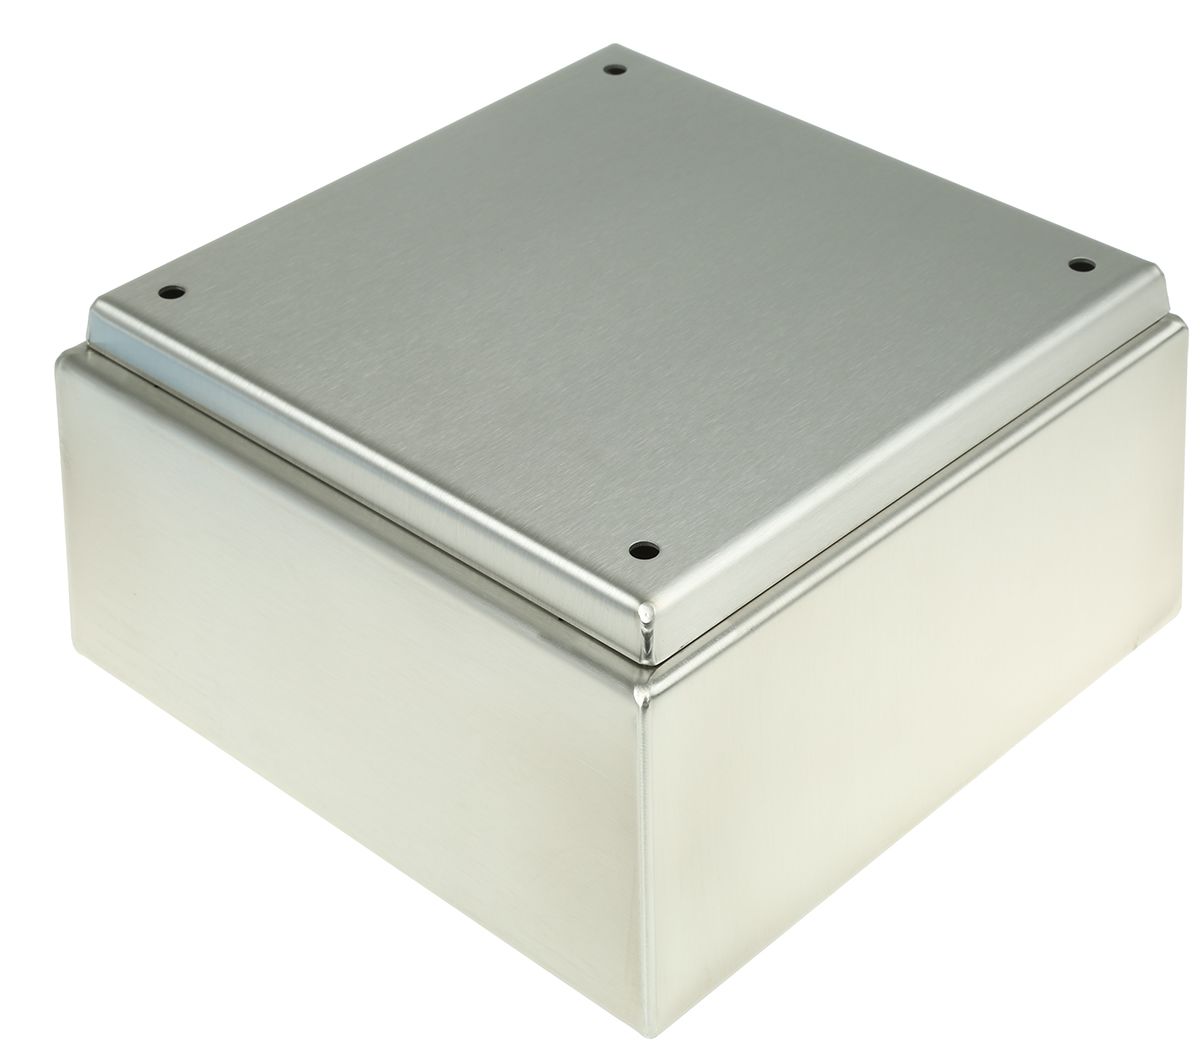 Rittal HD Series Stainless Steel Terminal Box, IP66, 200 mm x 200 mm x 120mm